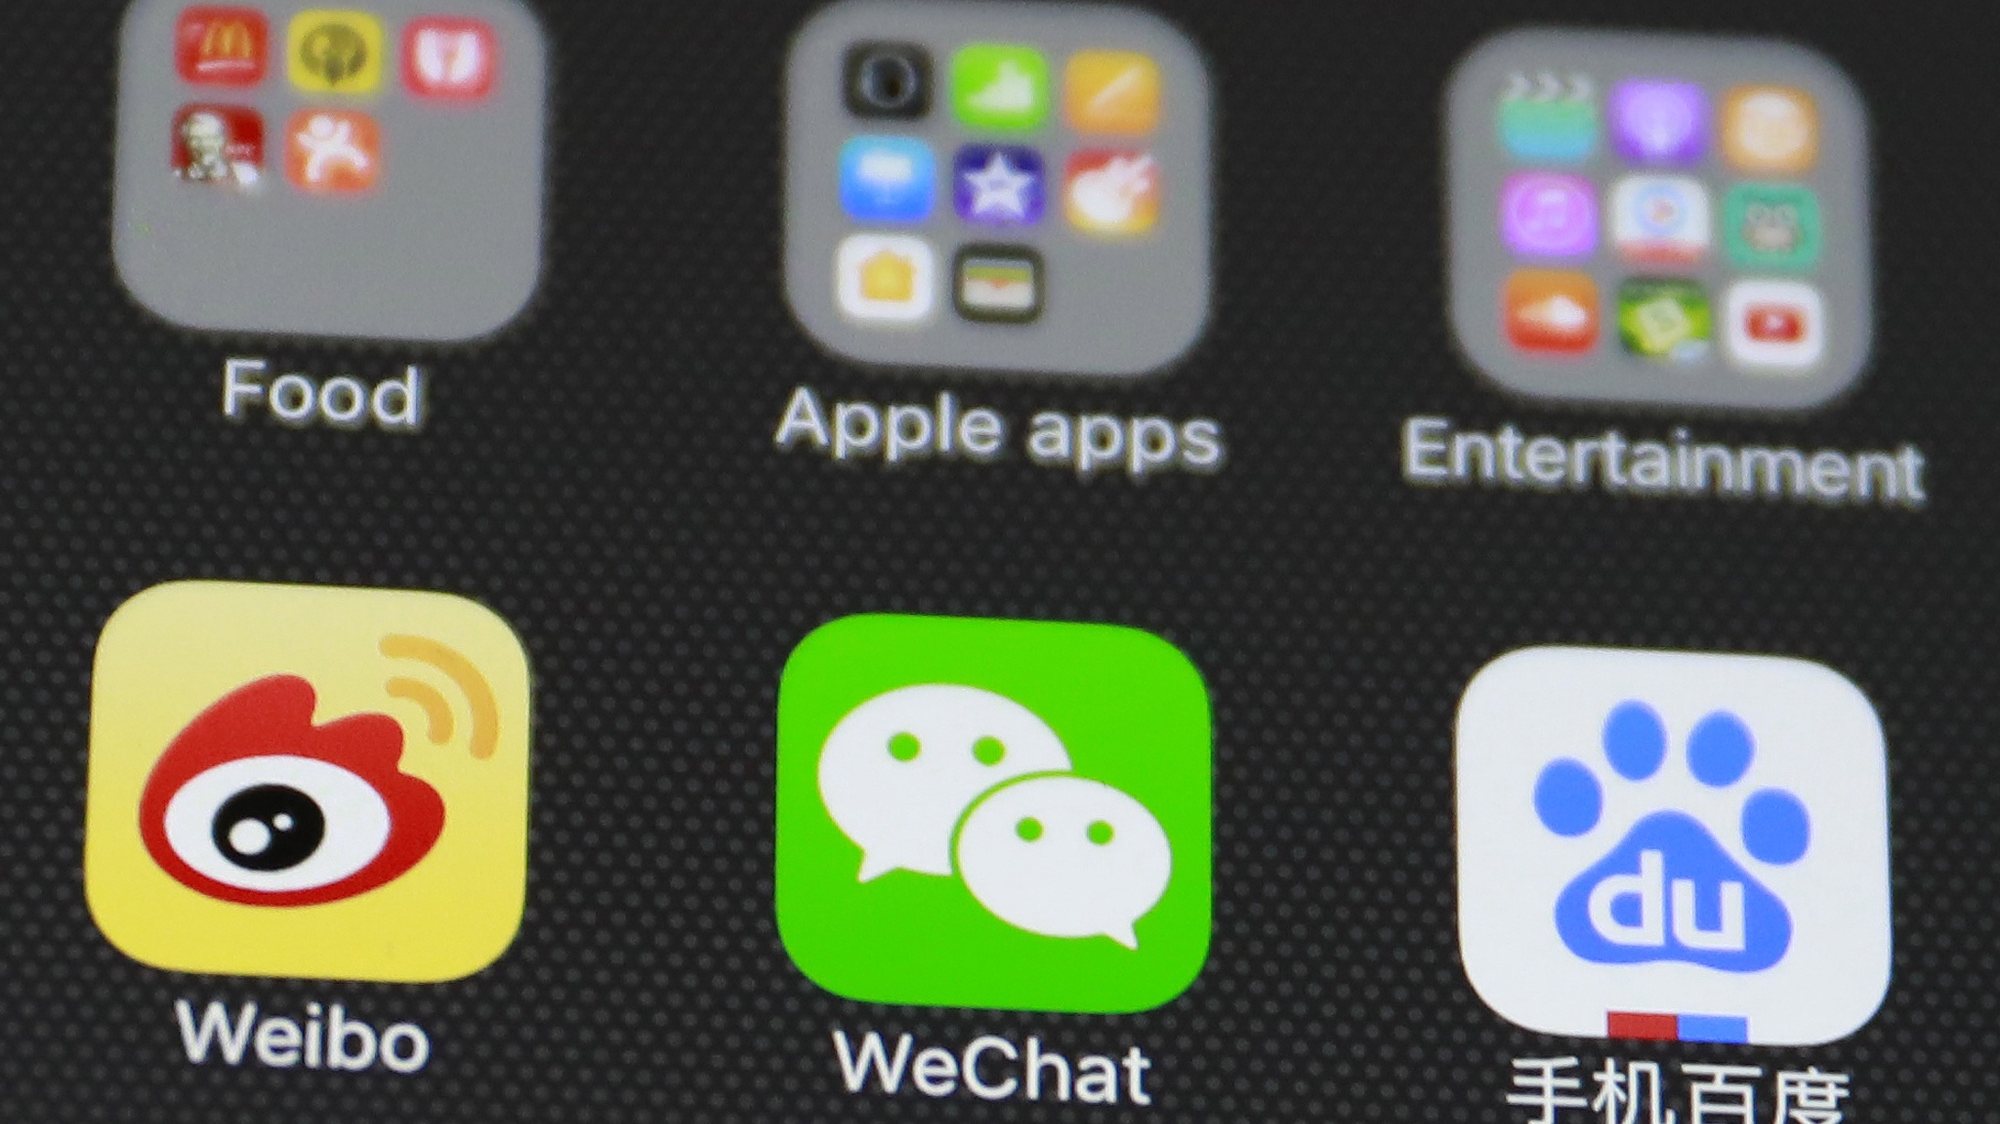 Icones de redes sociais chinesas como a Weibo